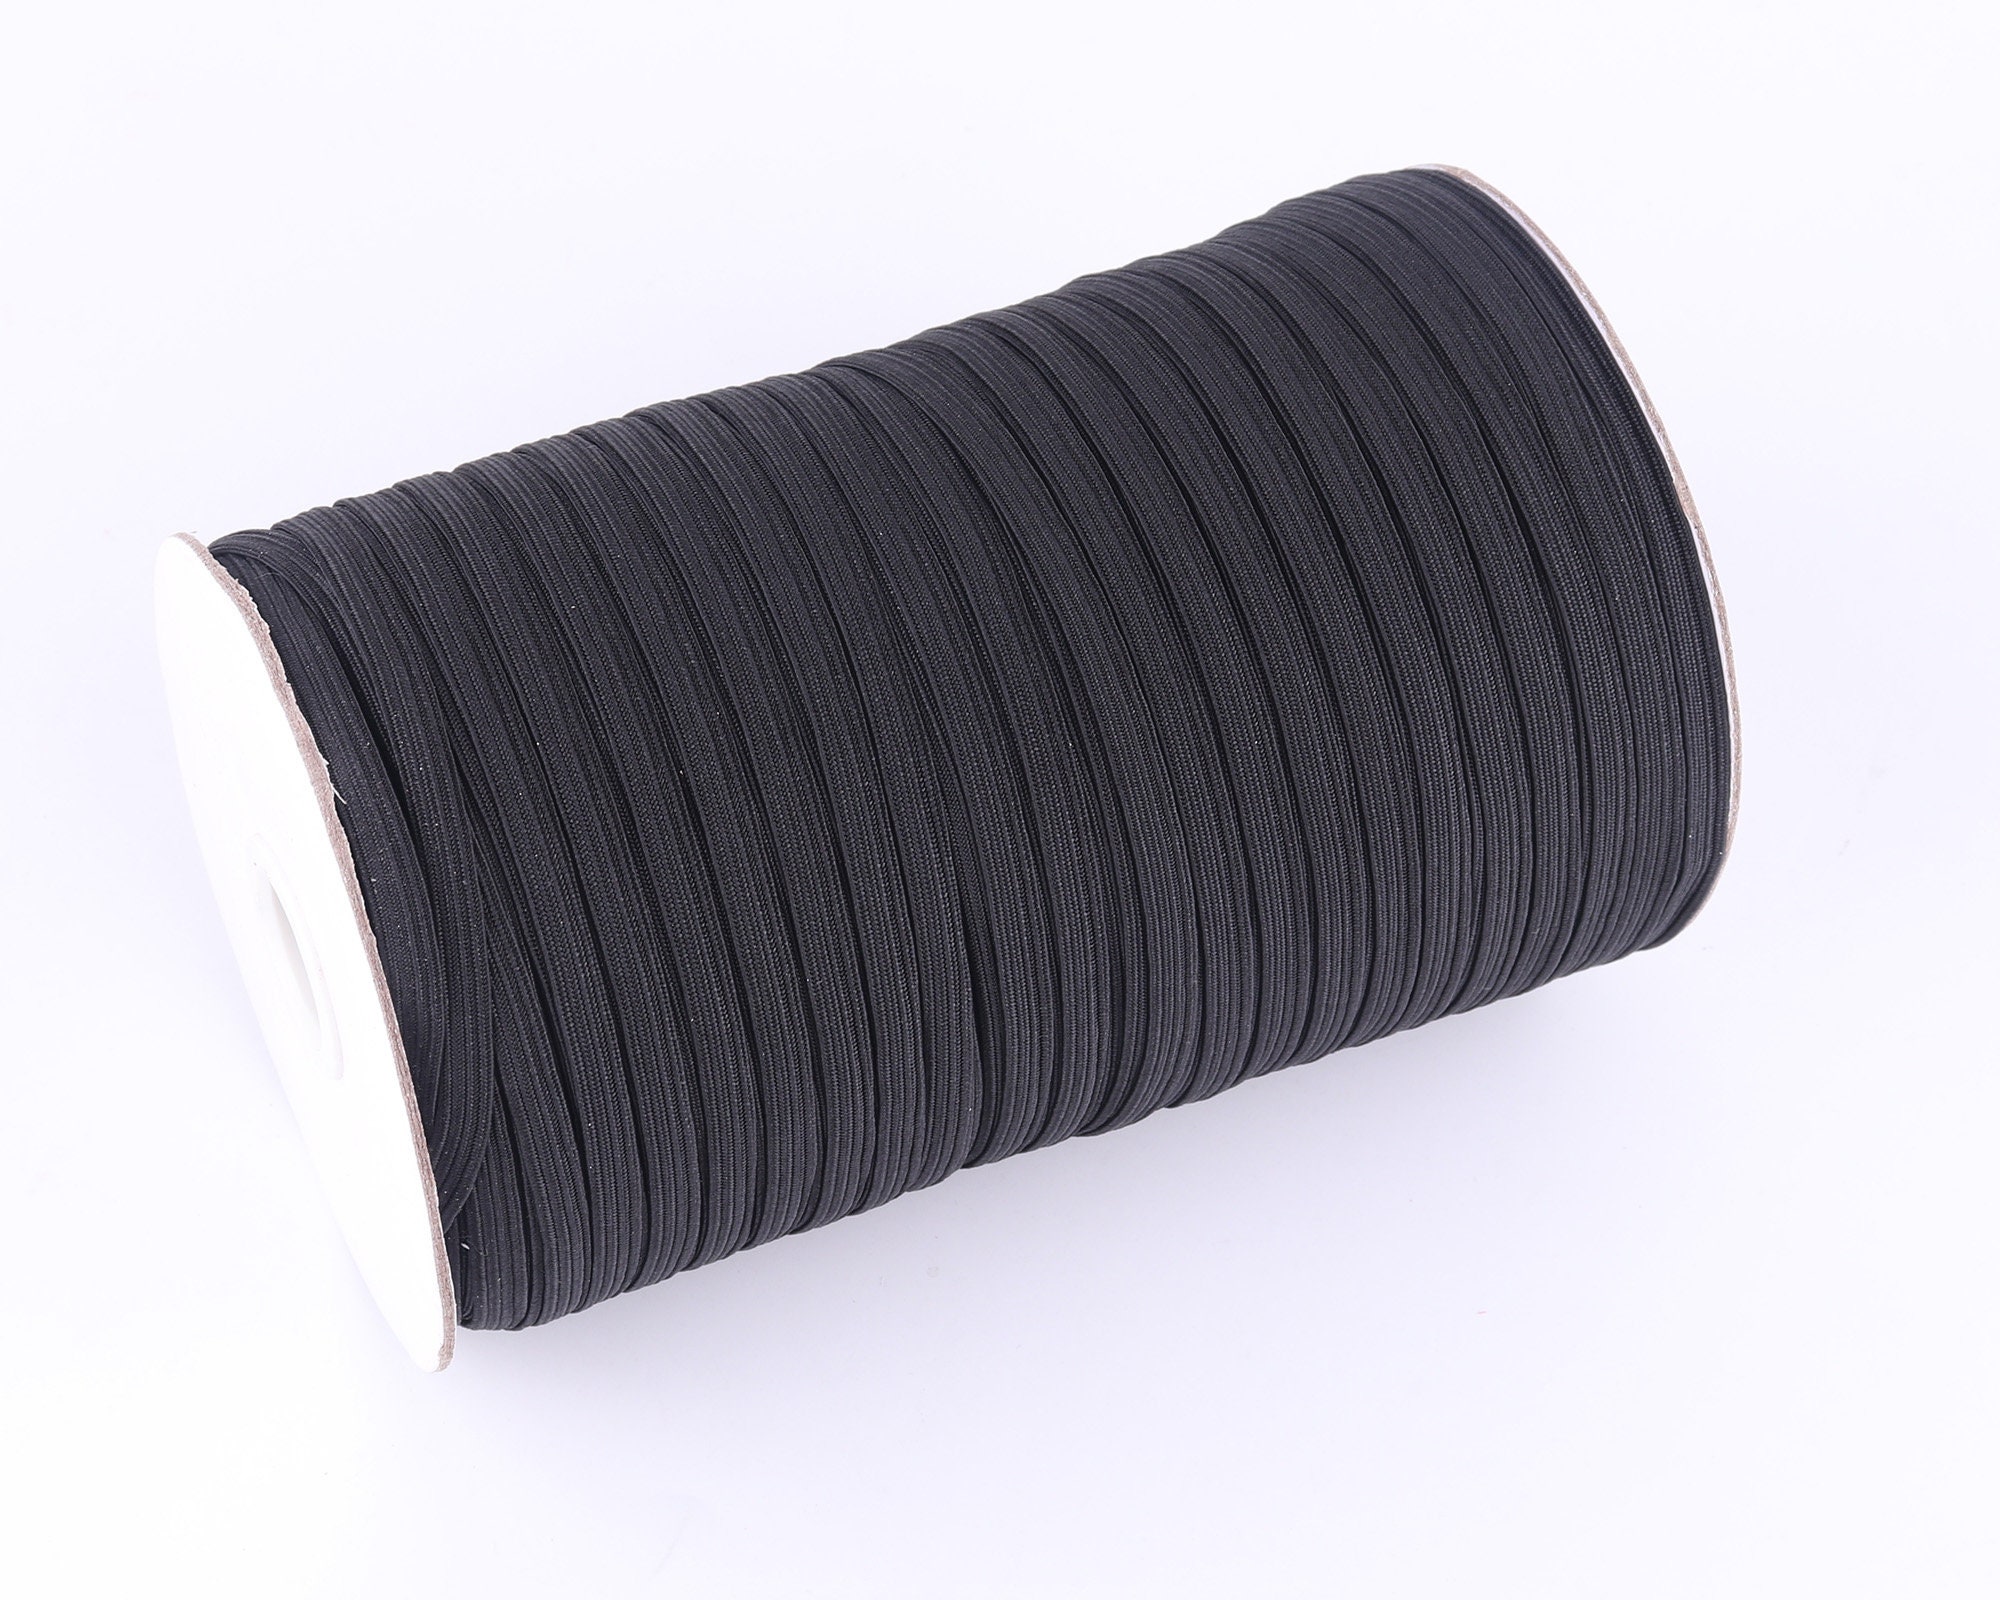 Thin Sewing 3mm Elastic Band White/black Color High Elastic Flat